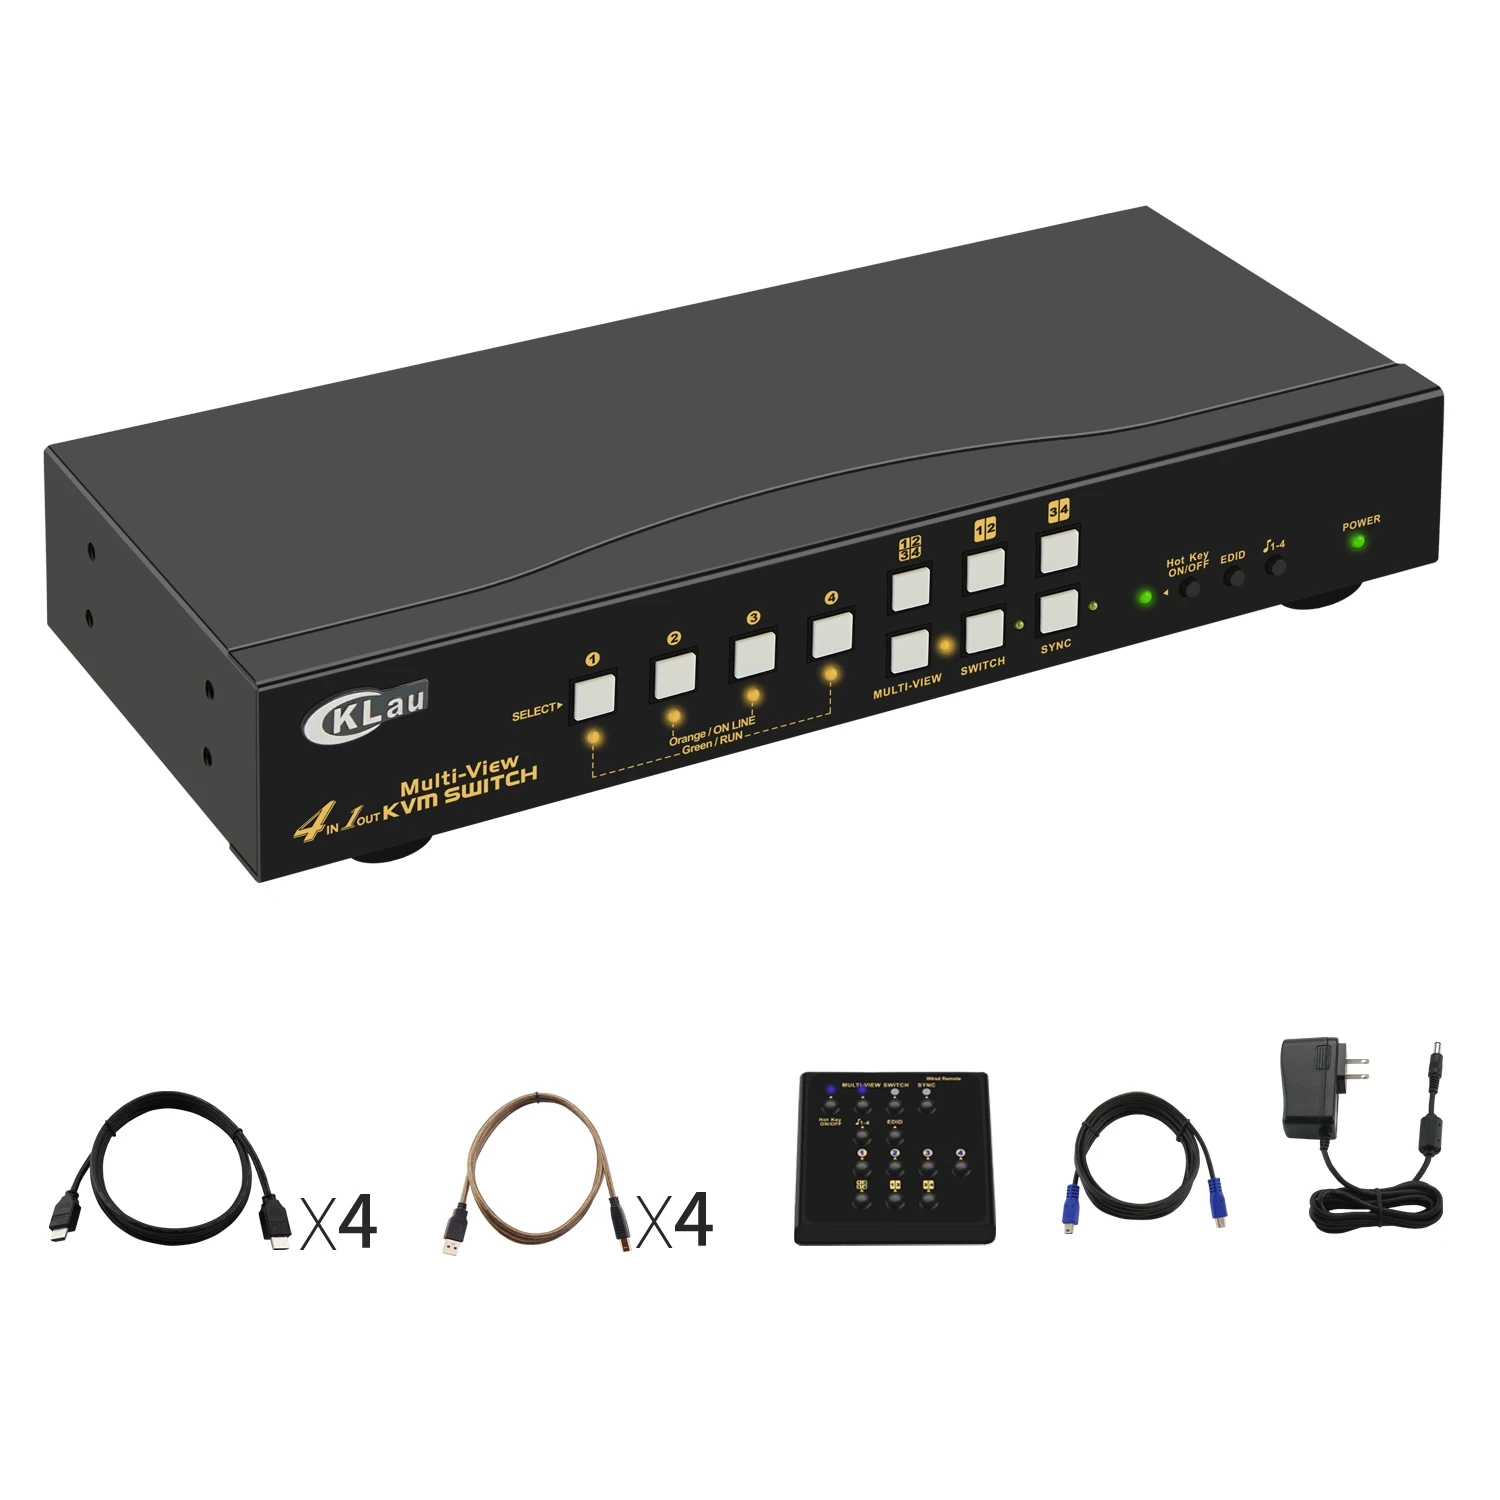 CKLau 4Kx2K 4 Port Multi-View KVM Switch HDMI, MVKVM Switch Support Across Screen, Single-View KVM Switching and Multi Computers